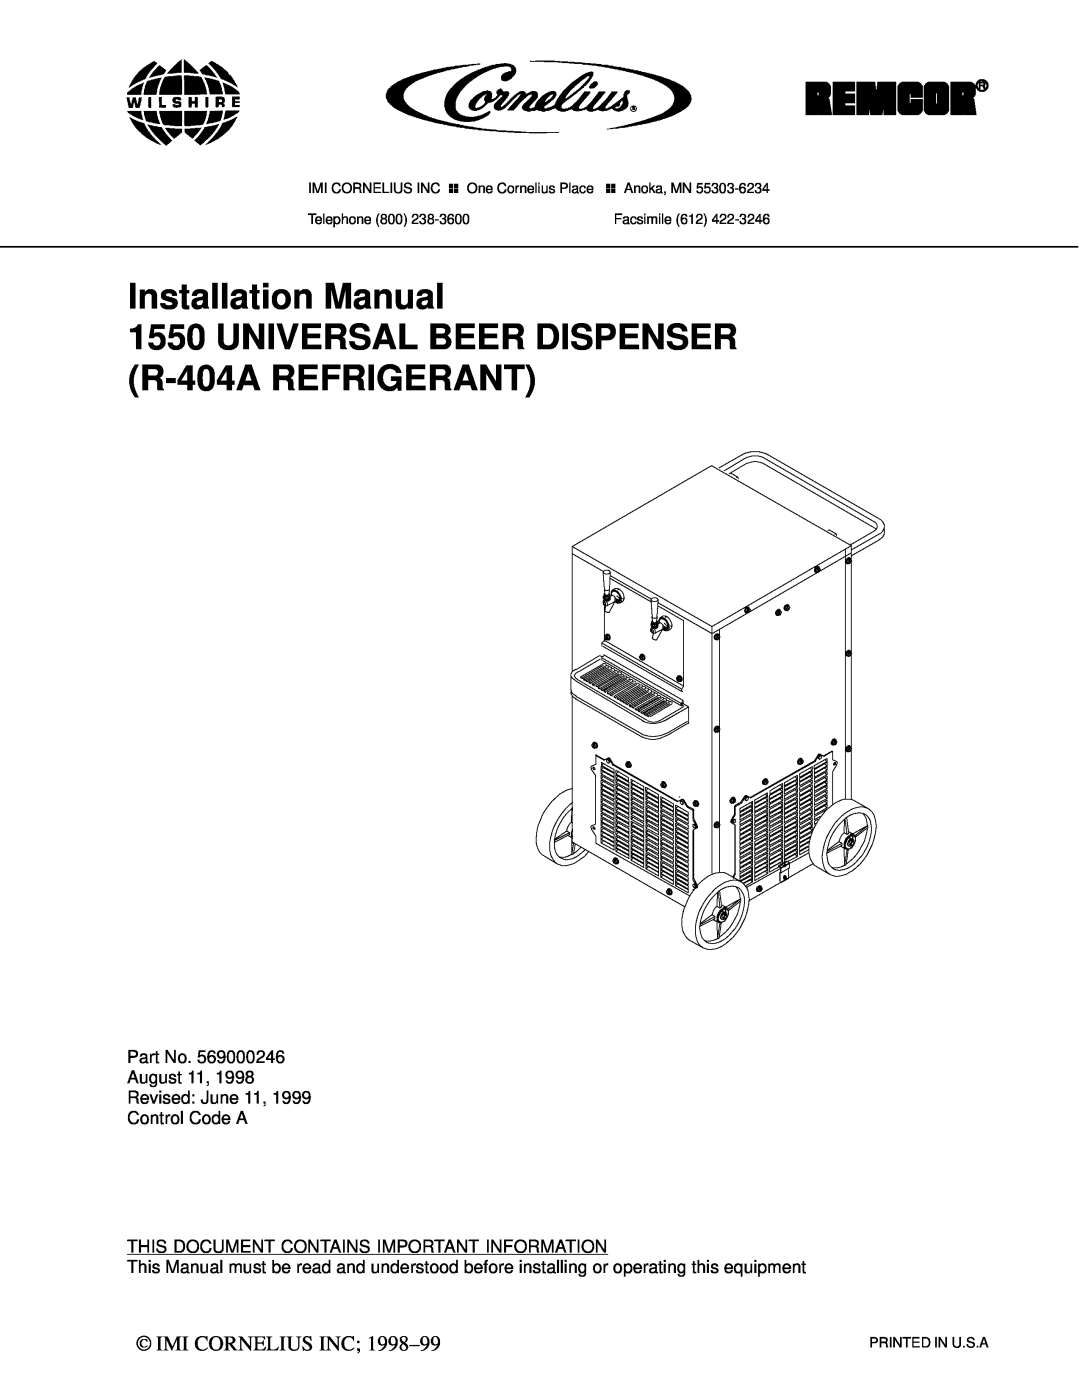 Cornelius 1550 installation manual Installation Manual, UNIVERSAL BEER DISPENSER R-404A REFRIGERANT,  Imi Cornelius Inc 